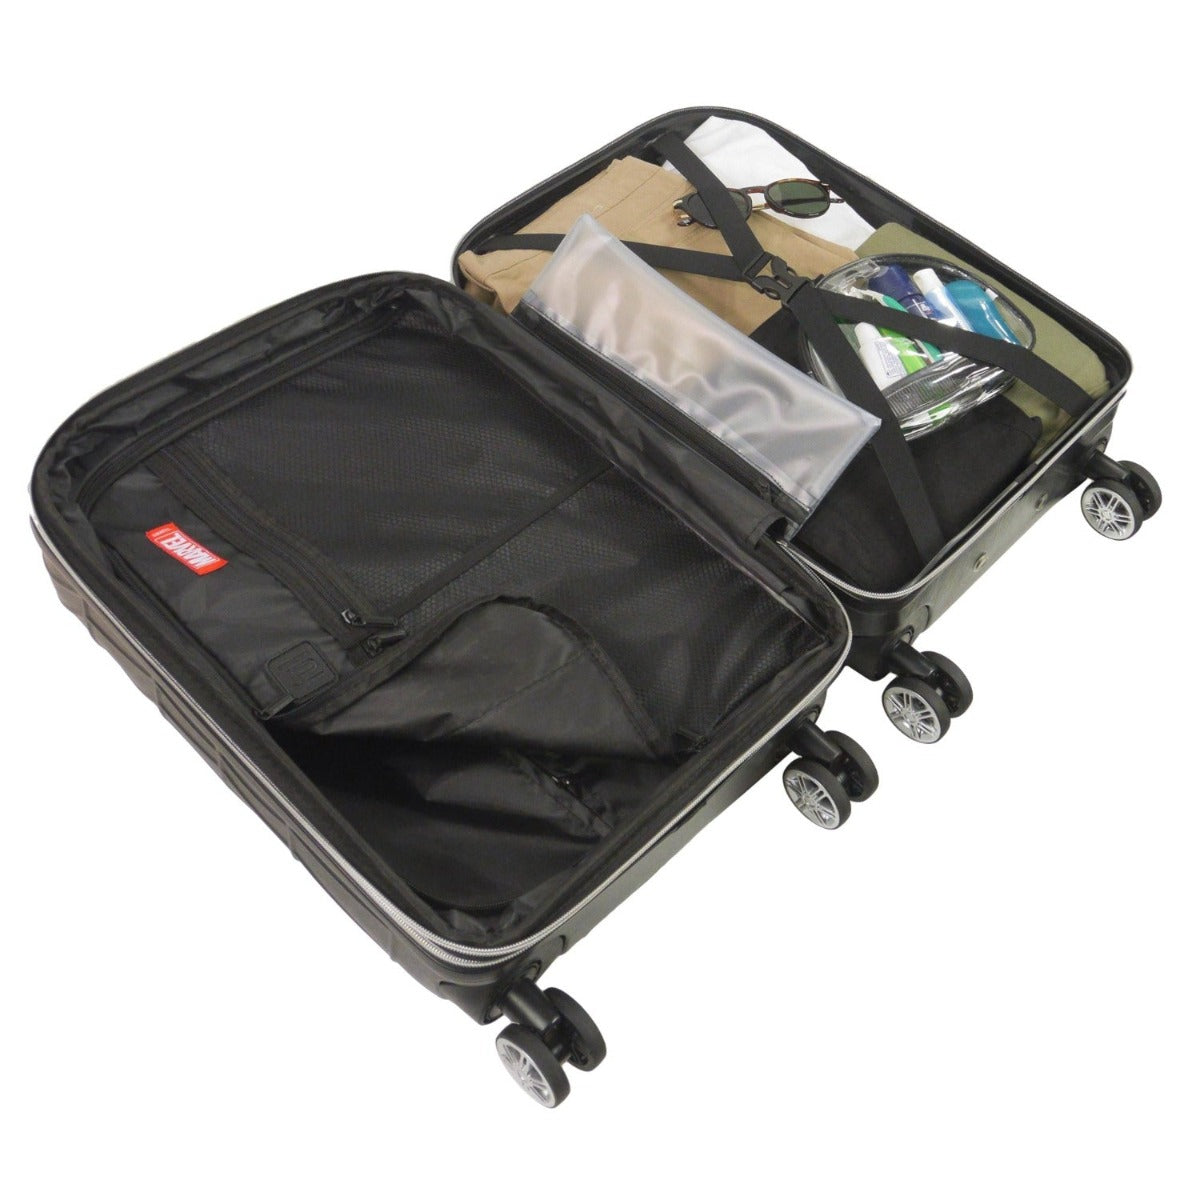 Spiderman Spinner Suitcase Luggage Black Set 3pc